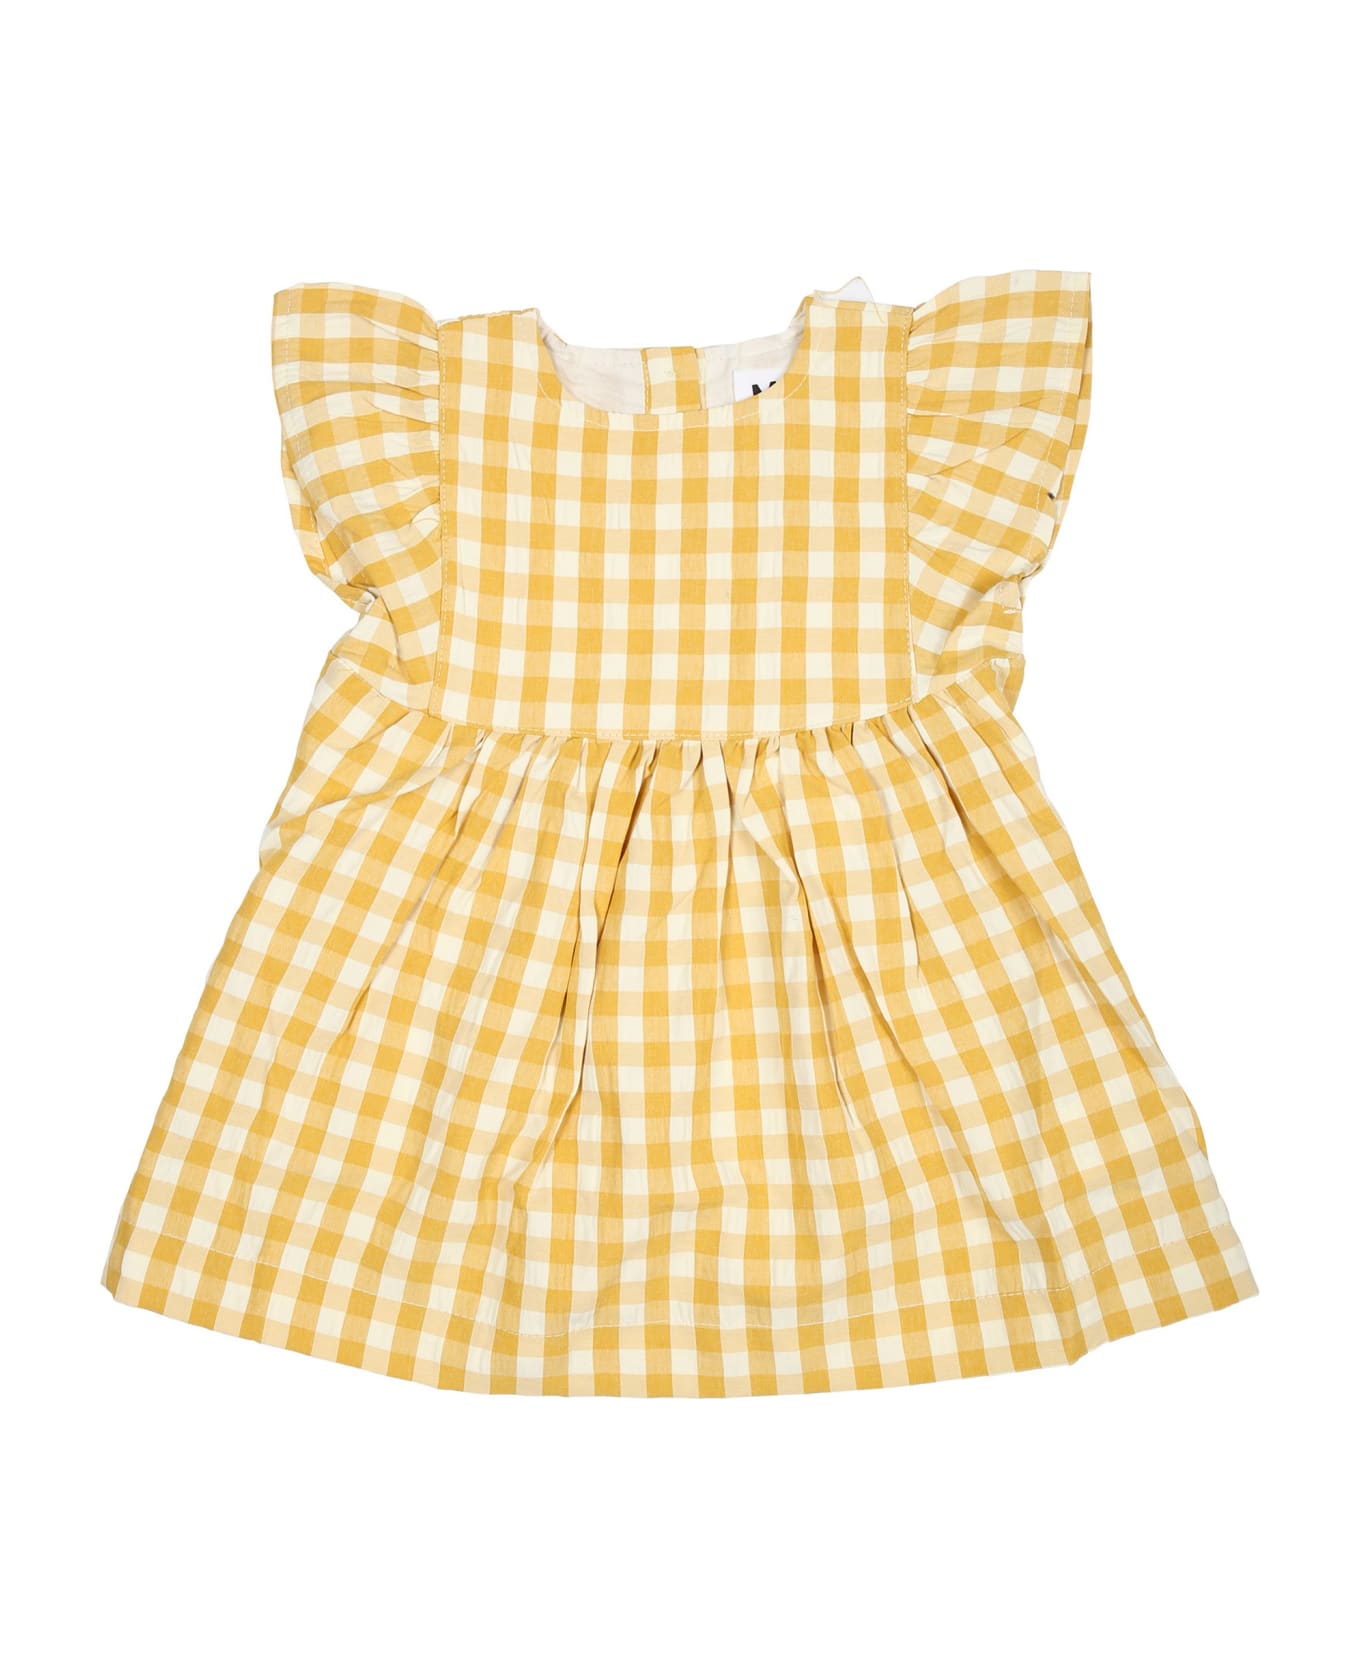 Molo Casual Yellow Dress Chantal For Baby Girl - Yellow ウェア